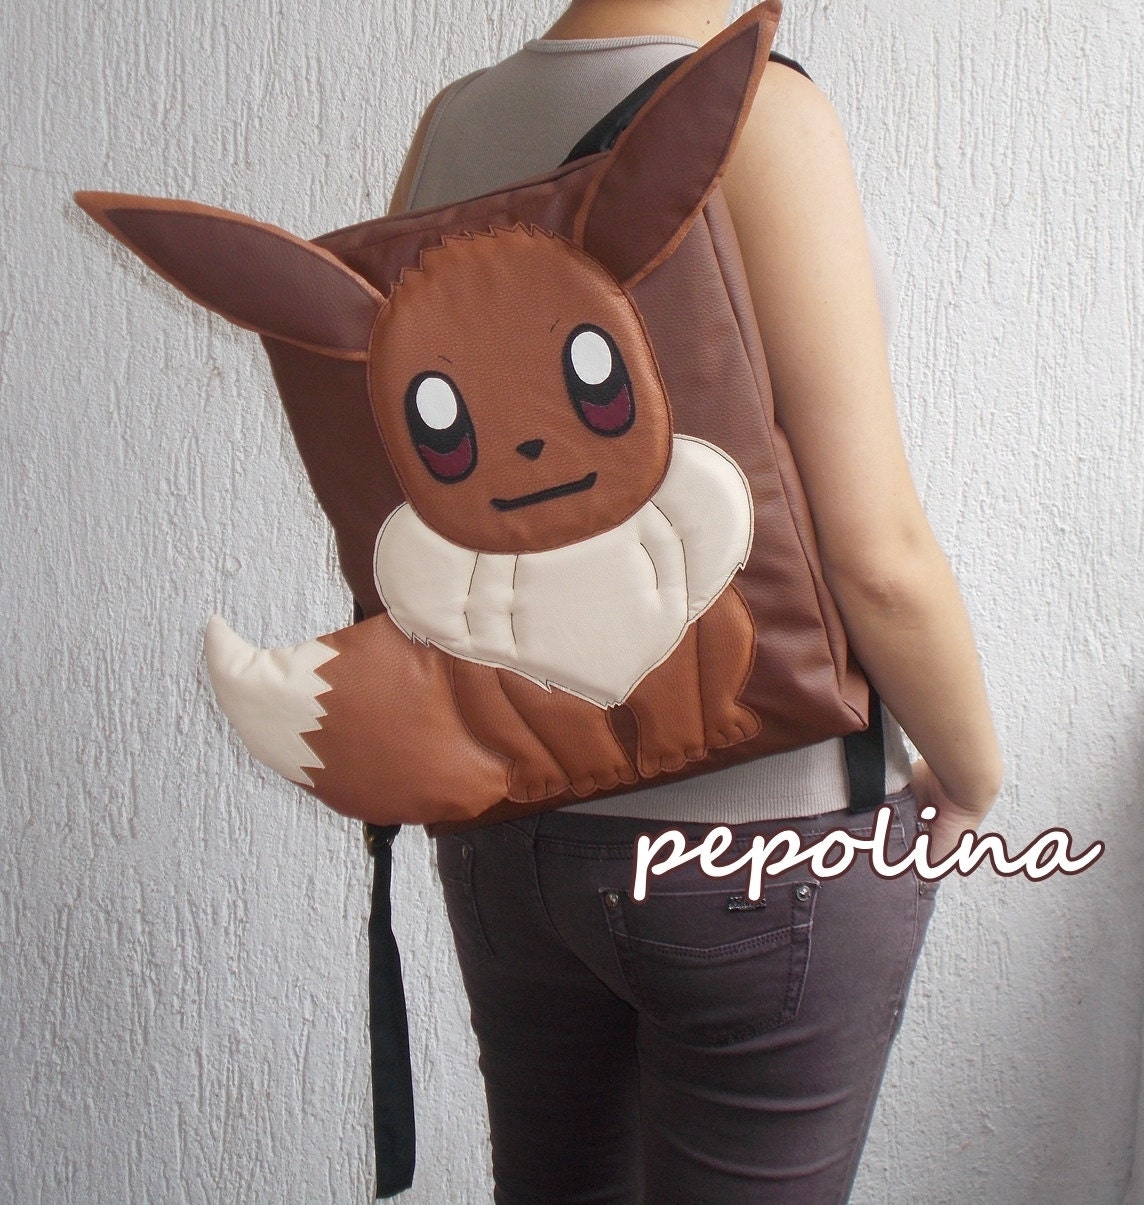 Pokemon Plush Eevee 16 Backpack with Chunk Webbing Puller